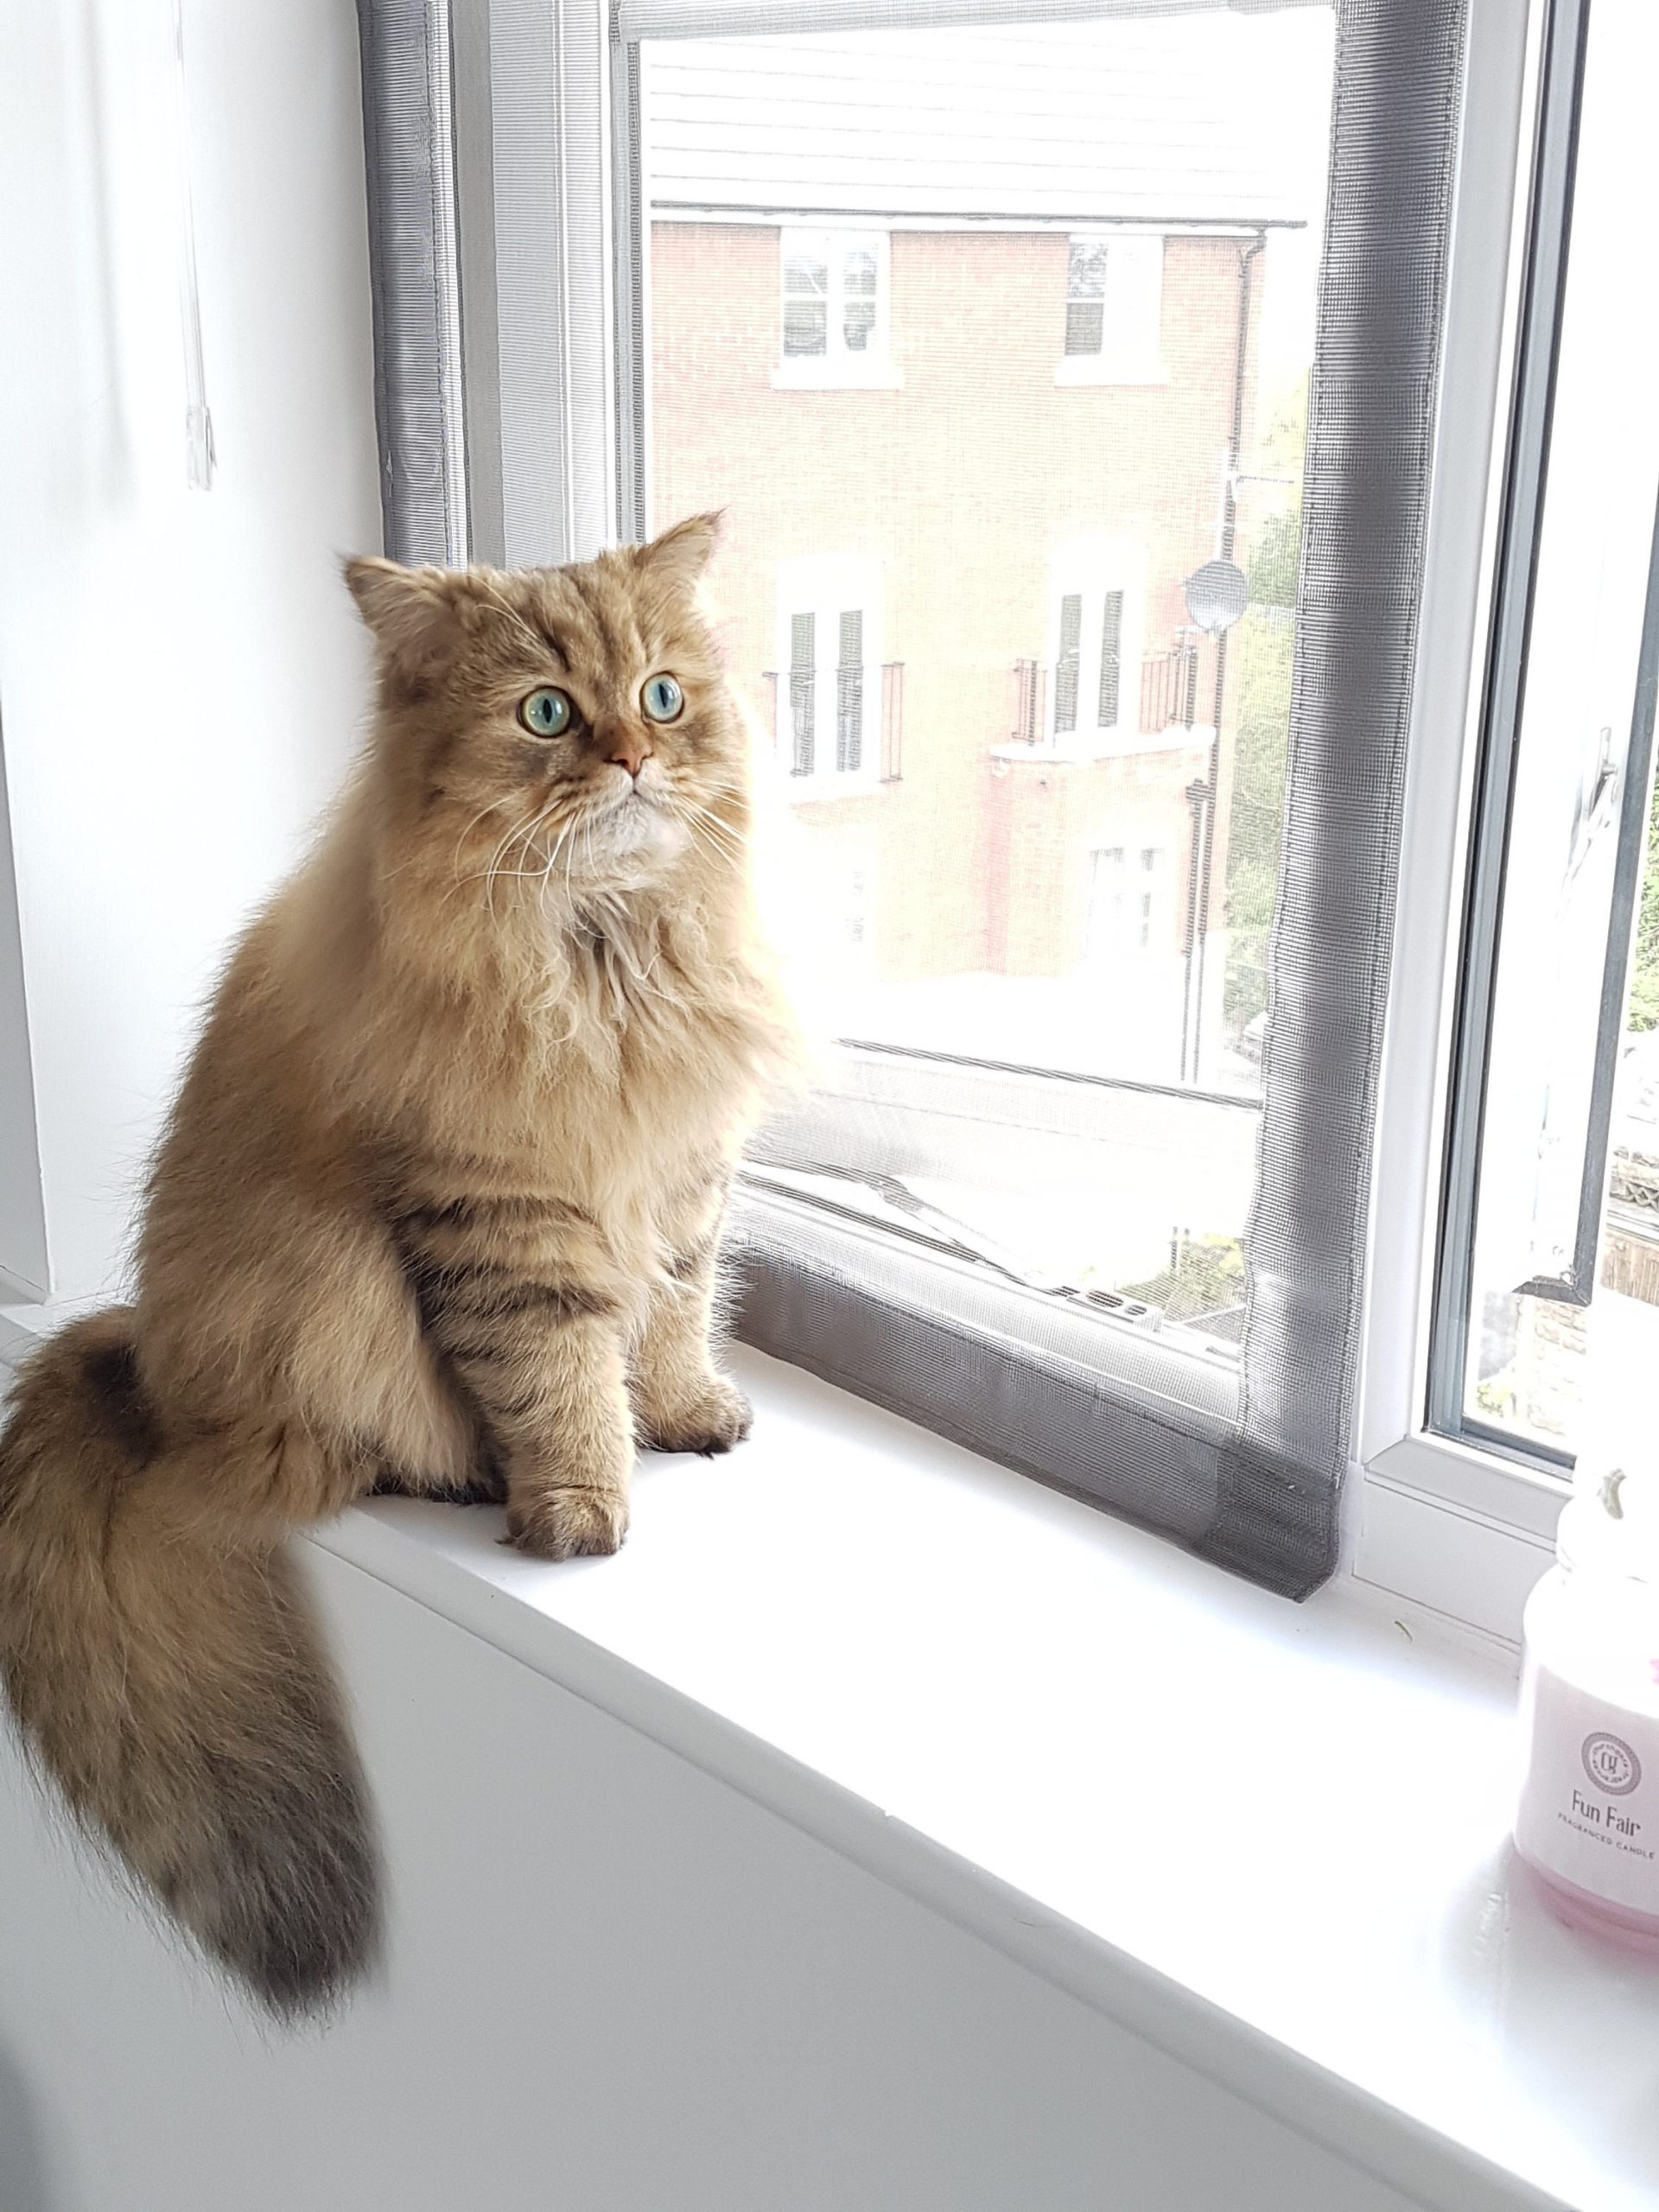 cat-proof window screens from Flat Cat